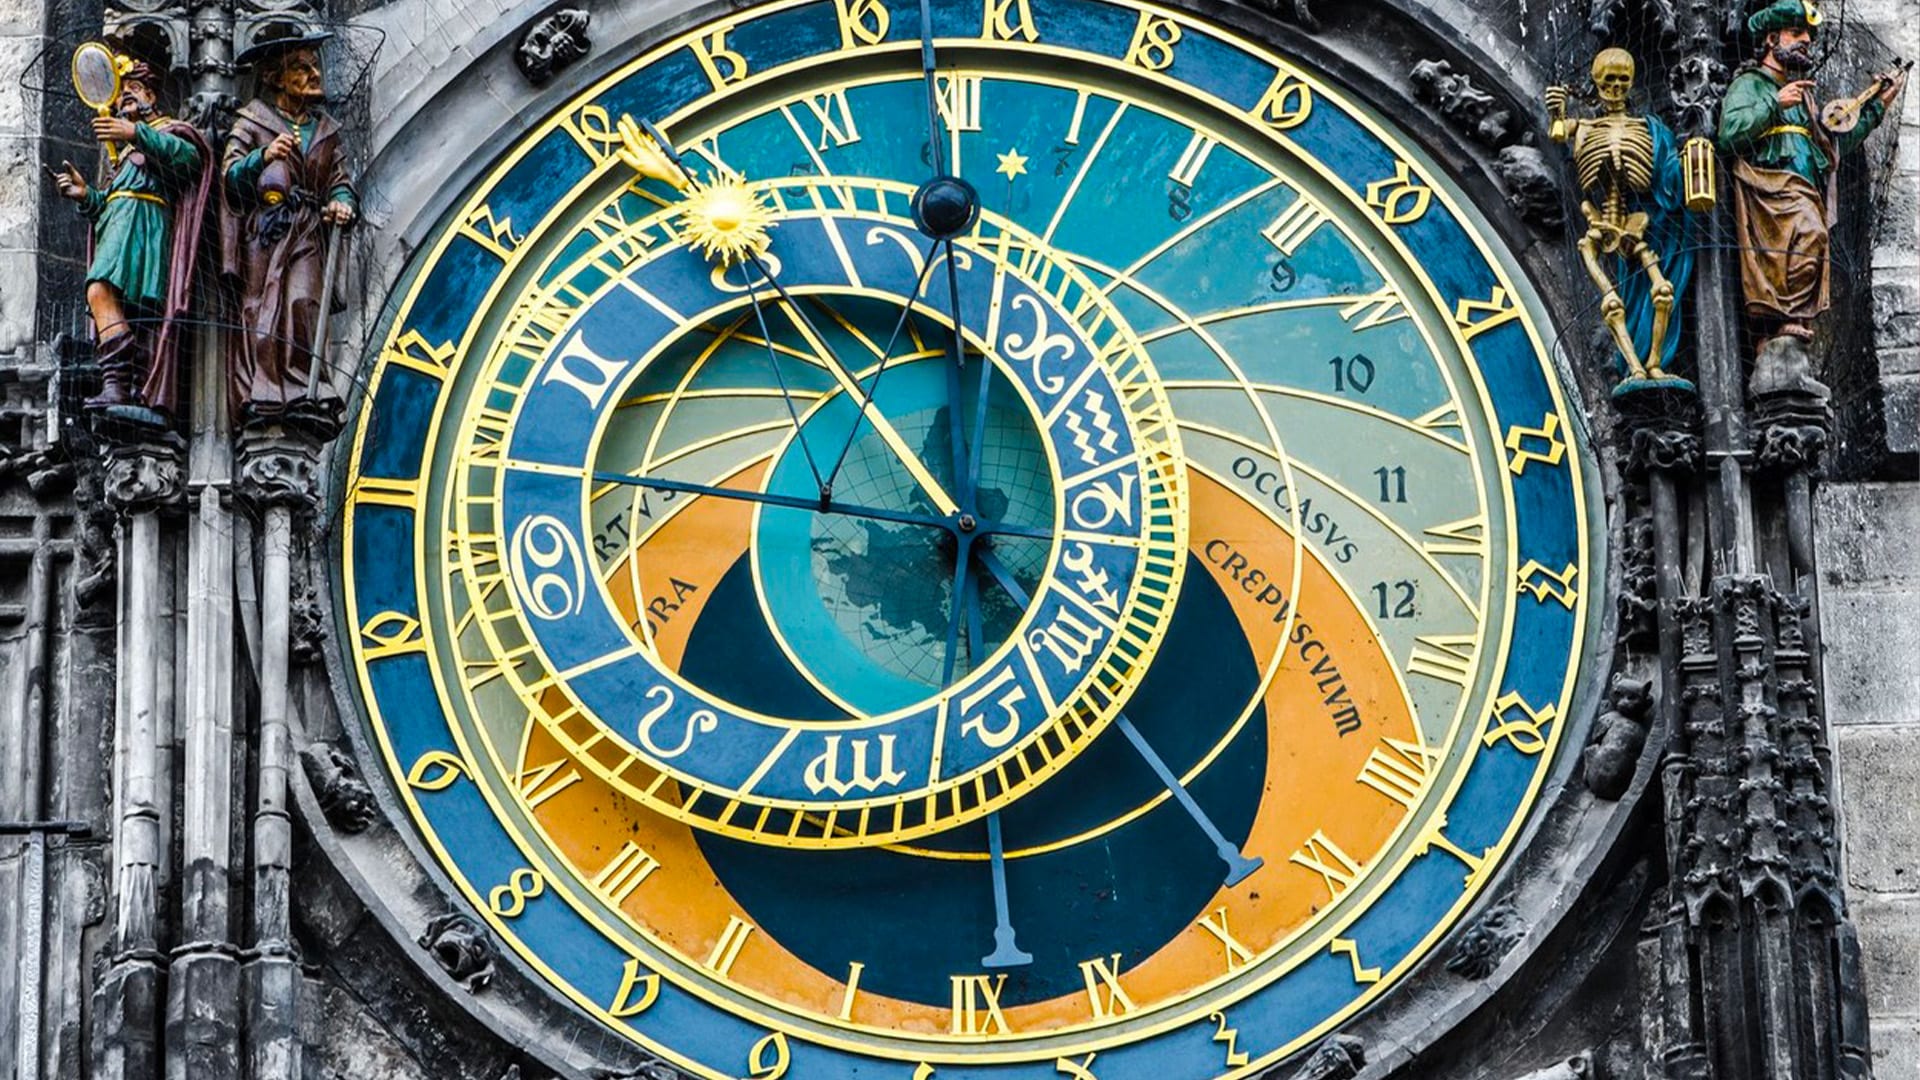 Kdy vznikl pražský orloj?